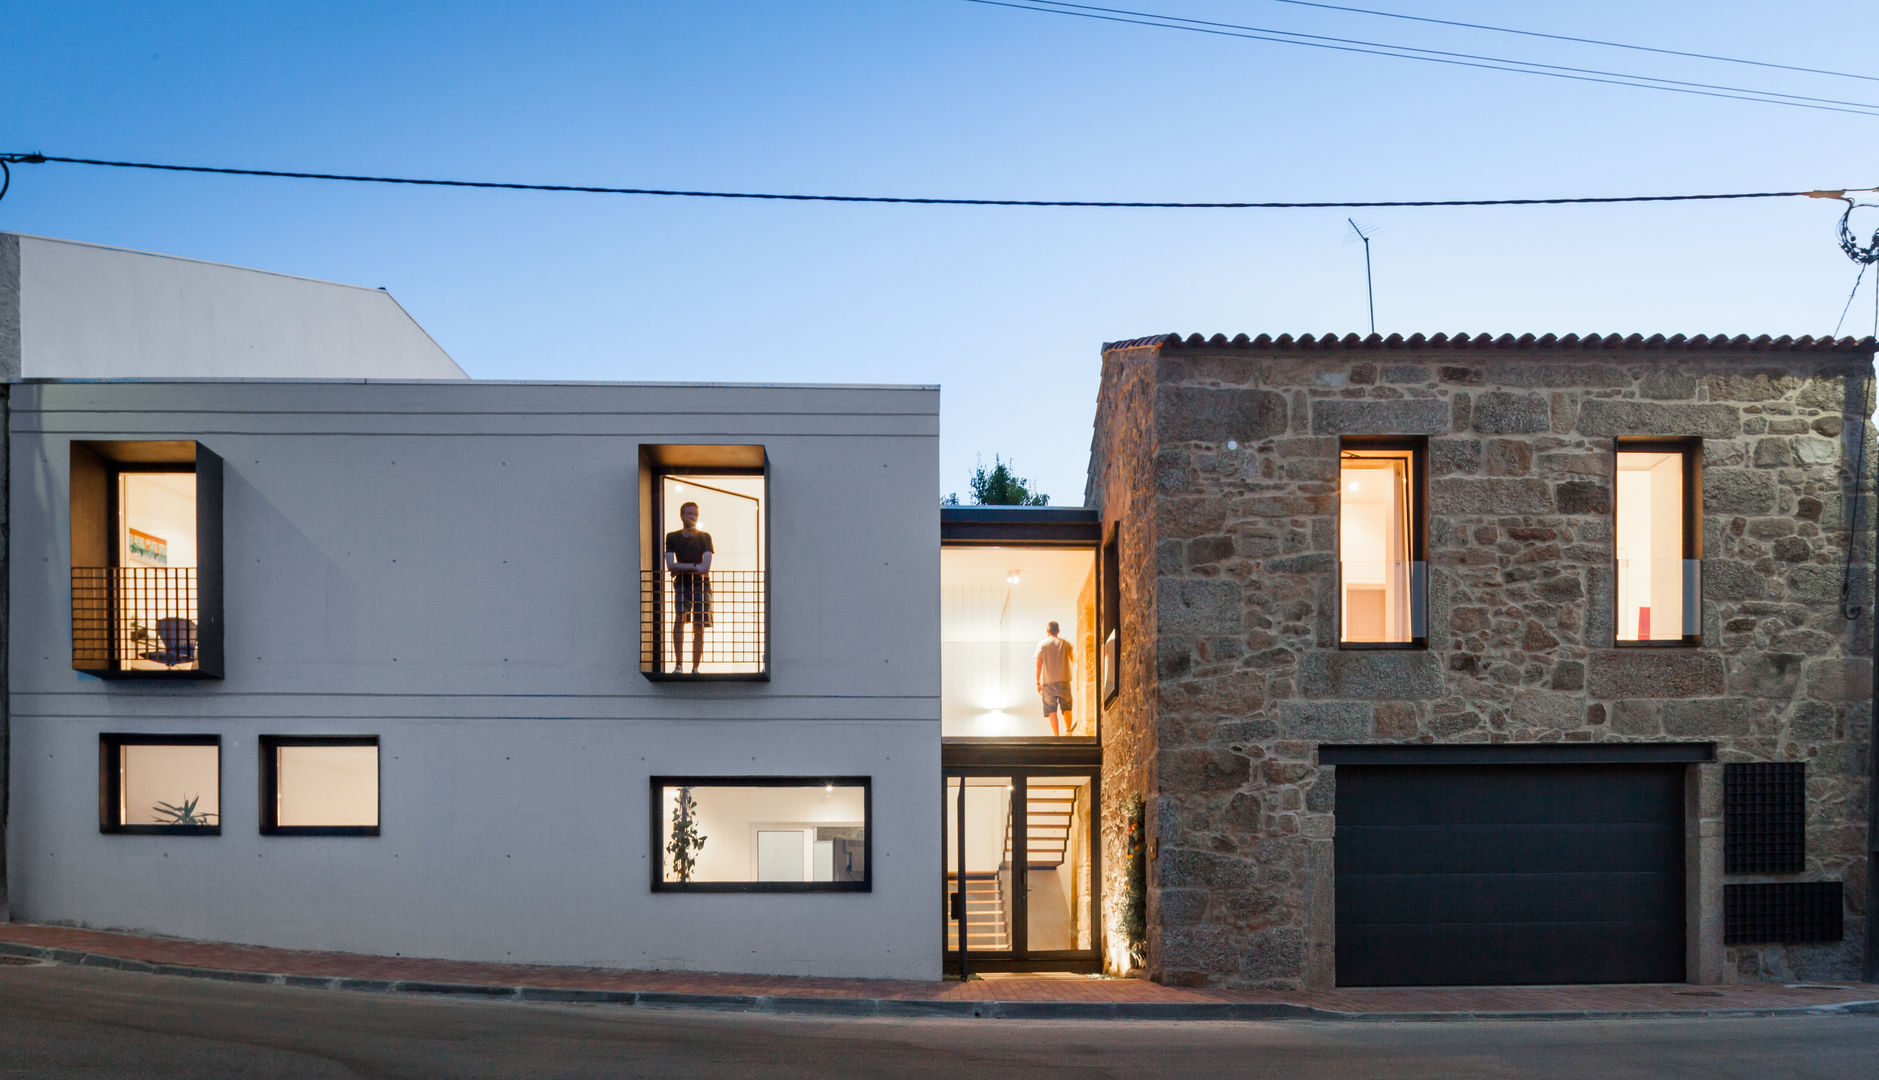 House JA - designed by Filipe Pina and Inês Costa., Joao Morgado - Architectural Photography Joao Morgado - Architectural Photography Espacios